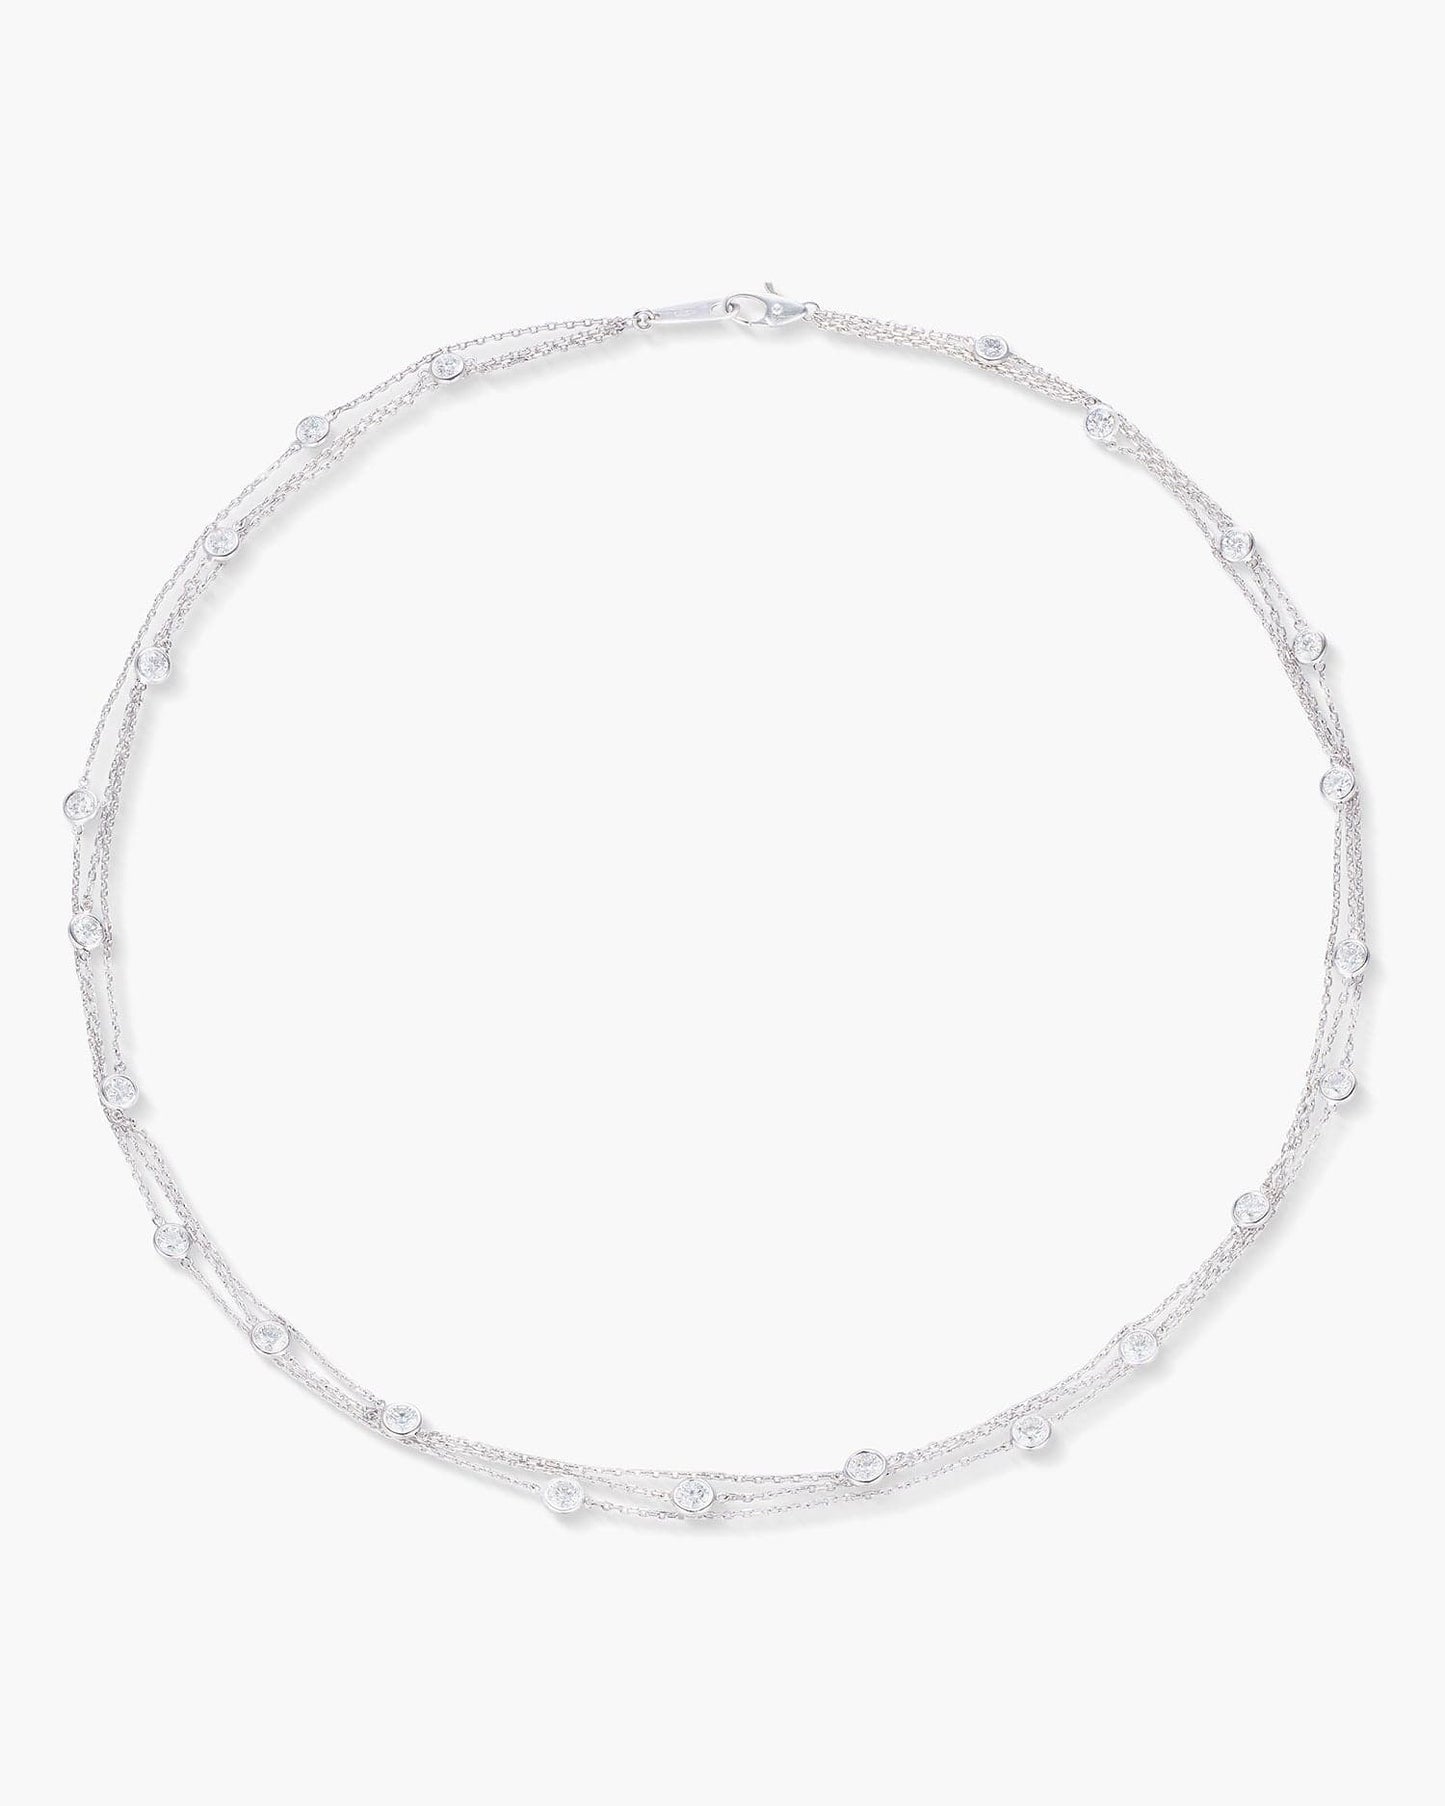 Round Brilliant Cut Diamond Necklace, 2.28 carats